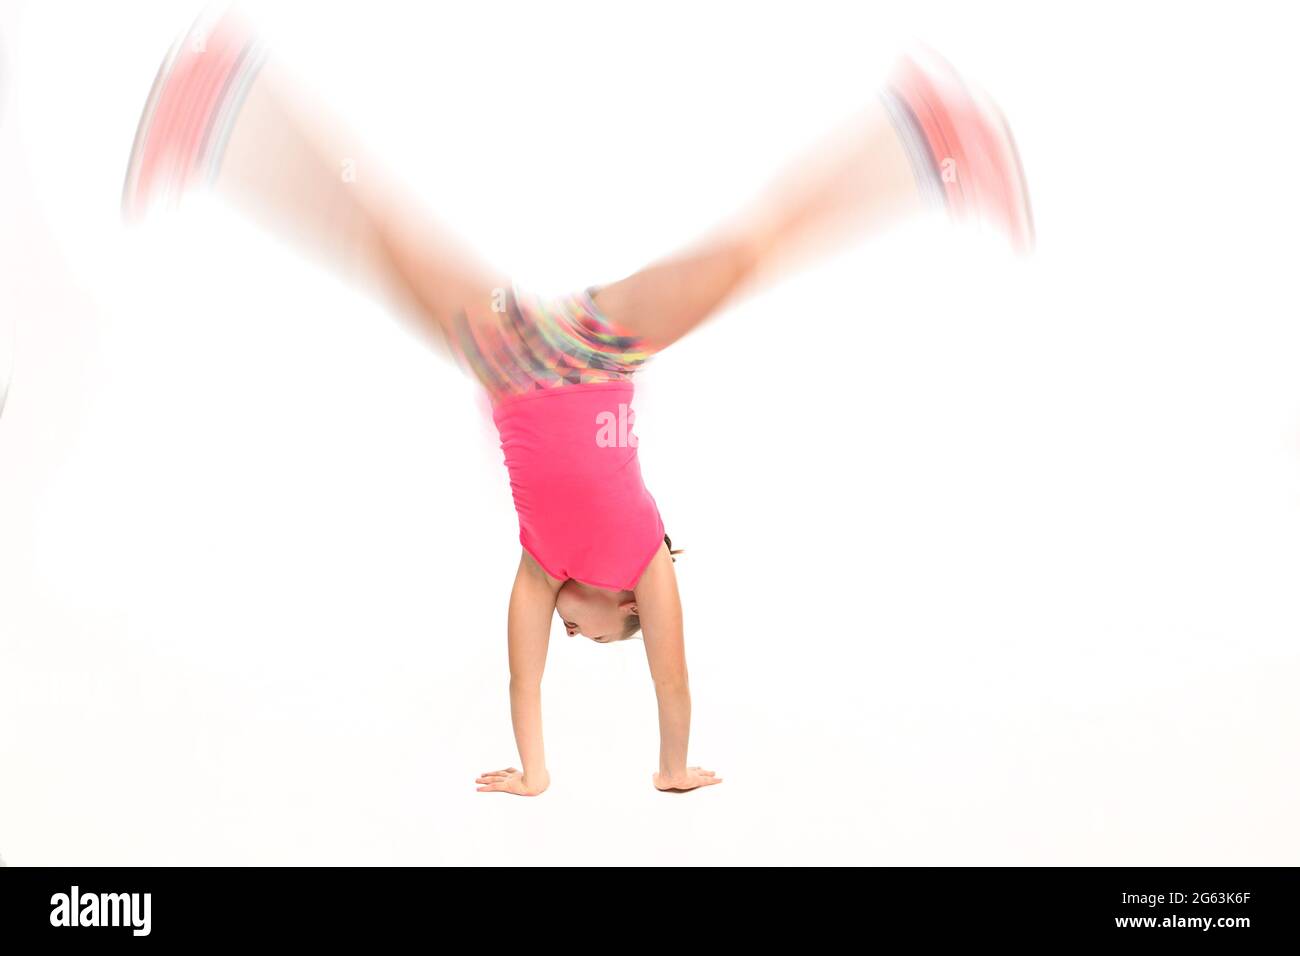 Girl doing a cartwheel at high speed. Stock Photo